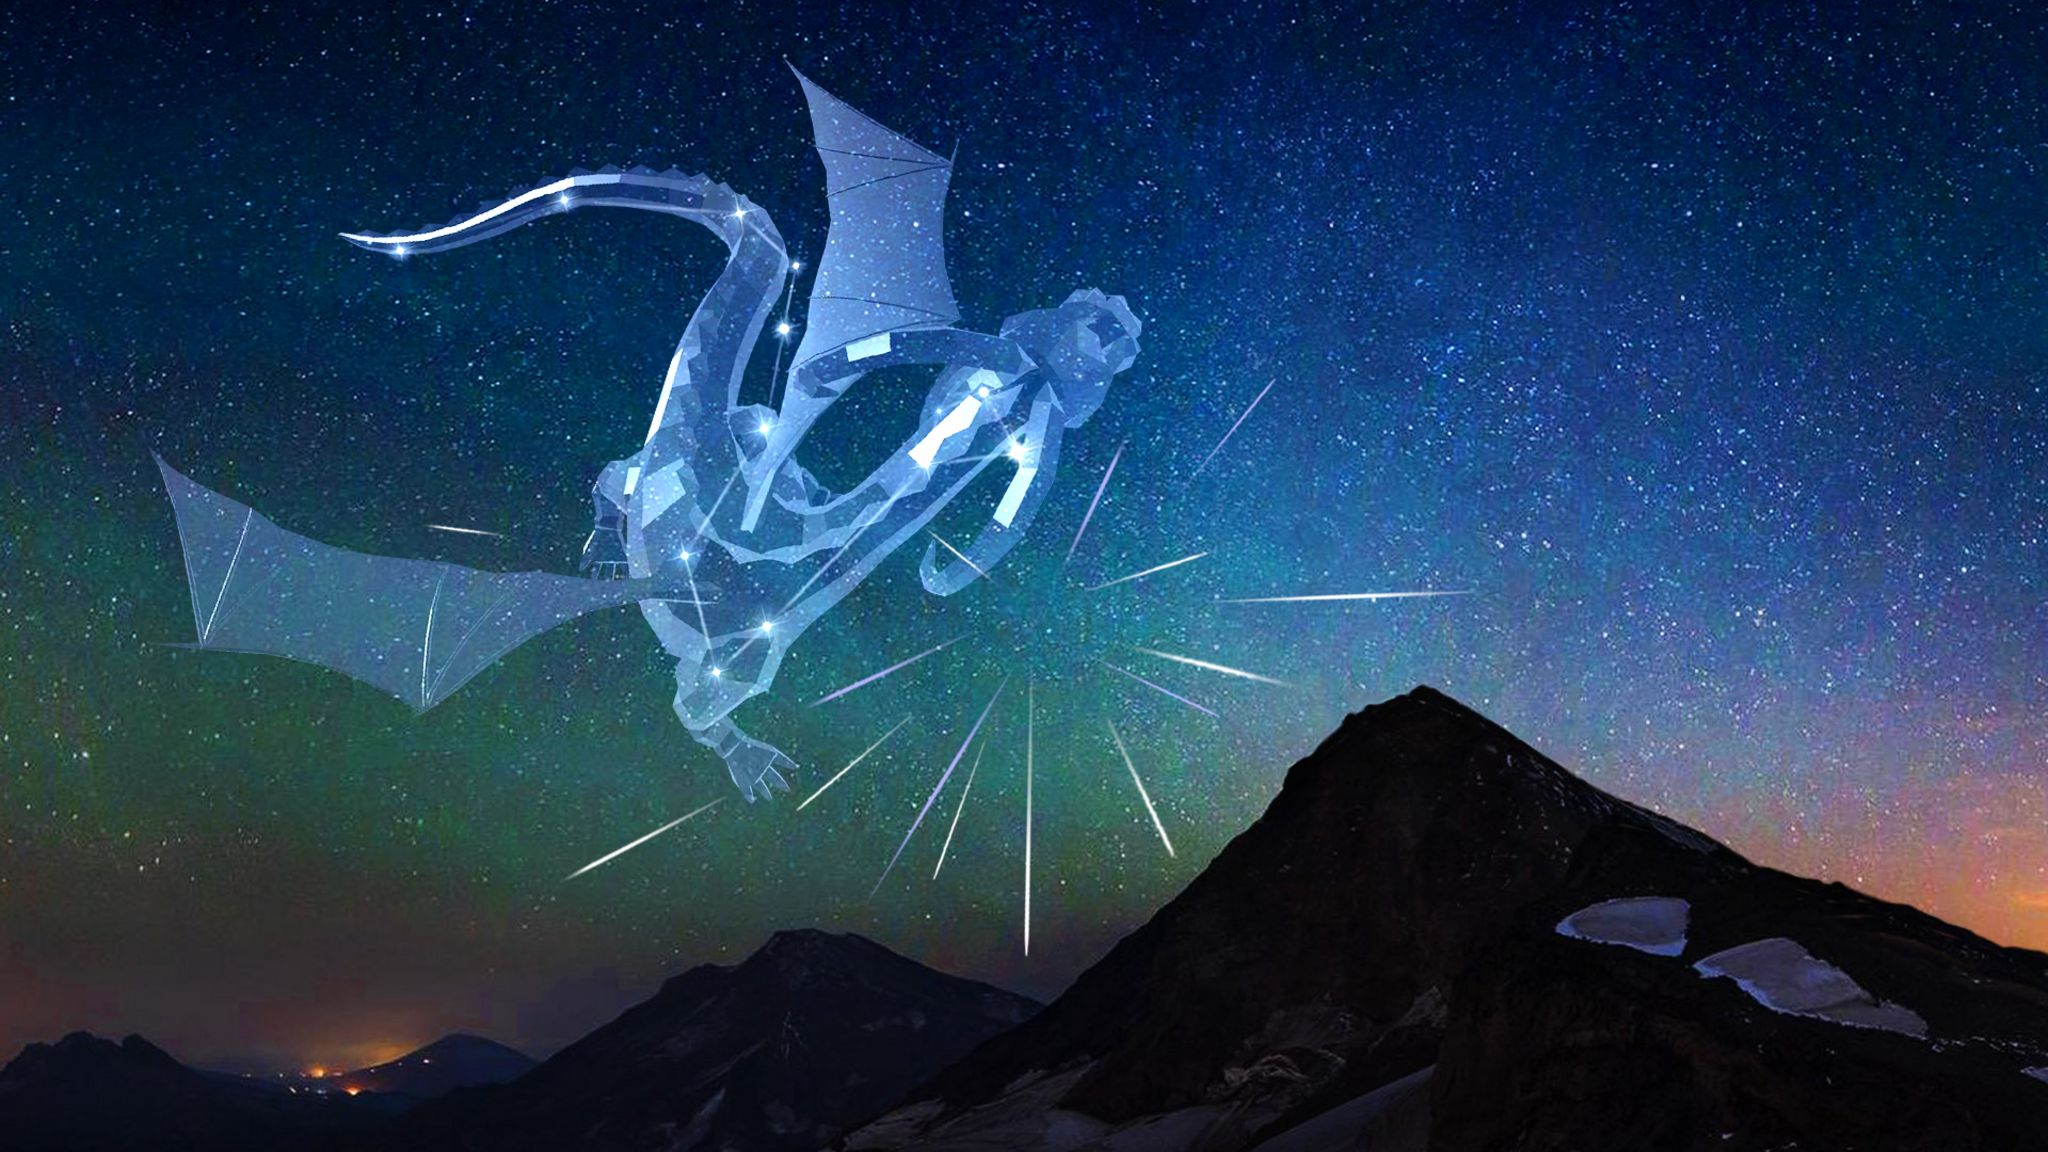 Kappa Cygnid Meteor Shower | Star Walk